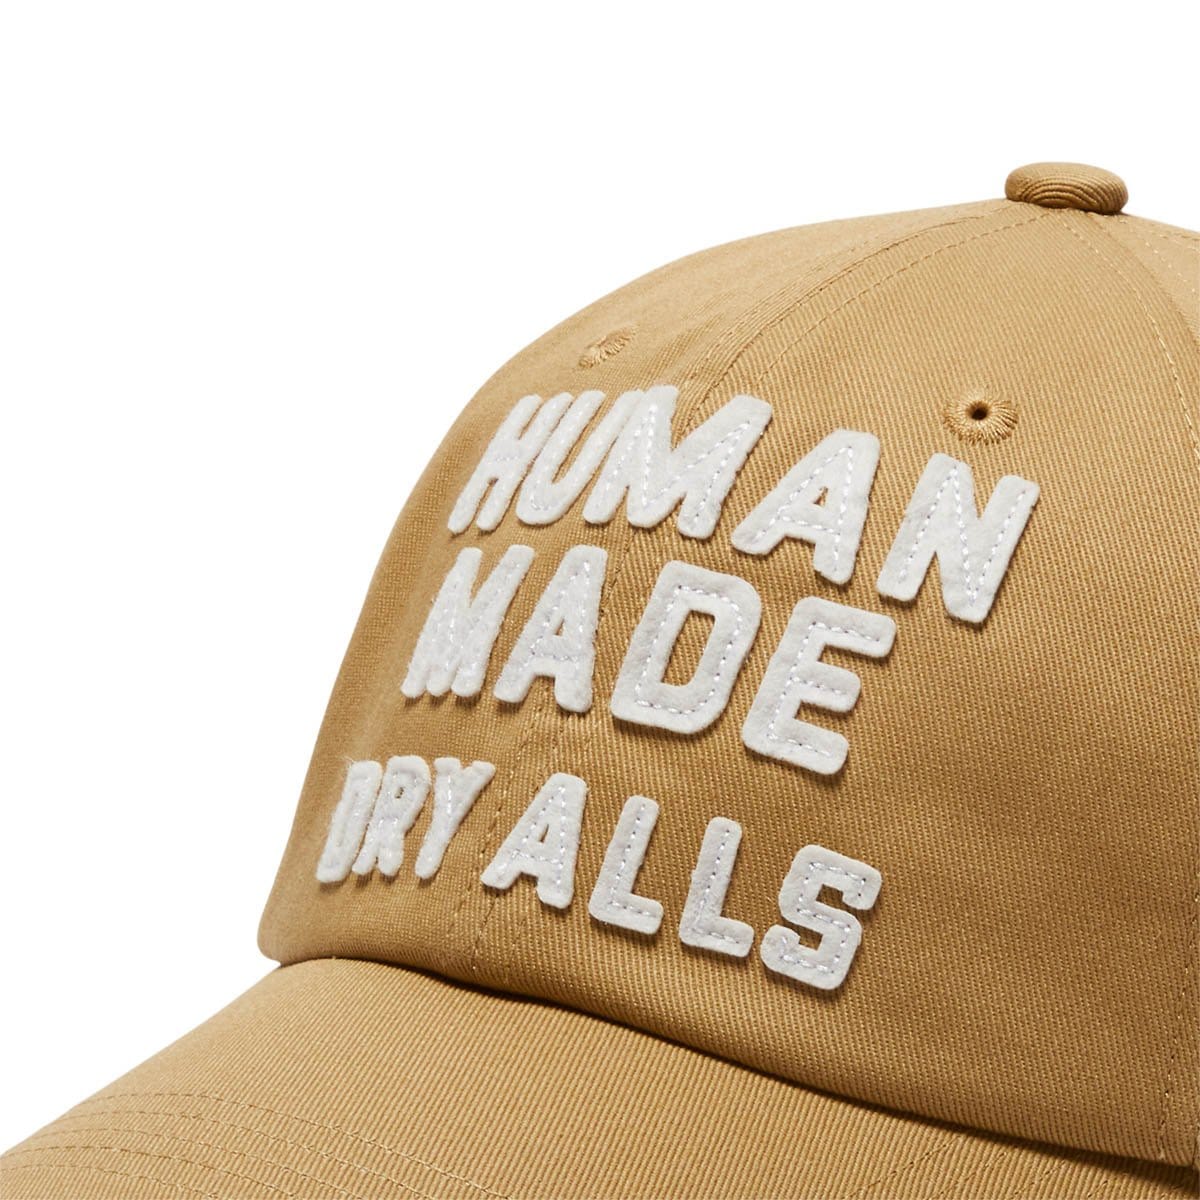 Human Made Headwear BEIGE / O/S 6 PANEL TWILL CAP #2